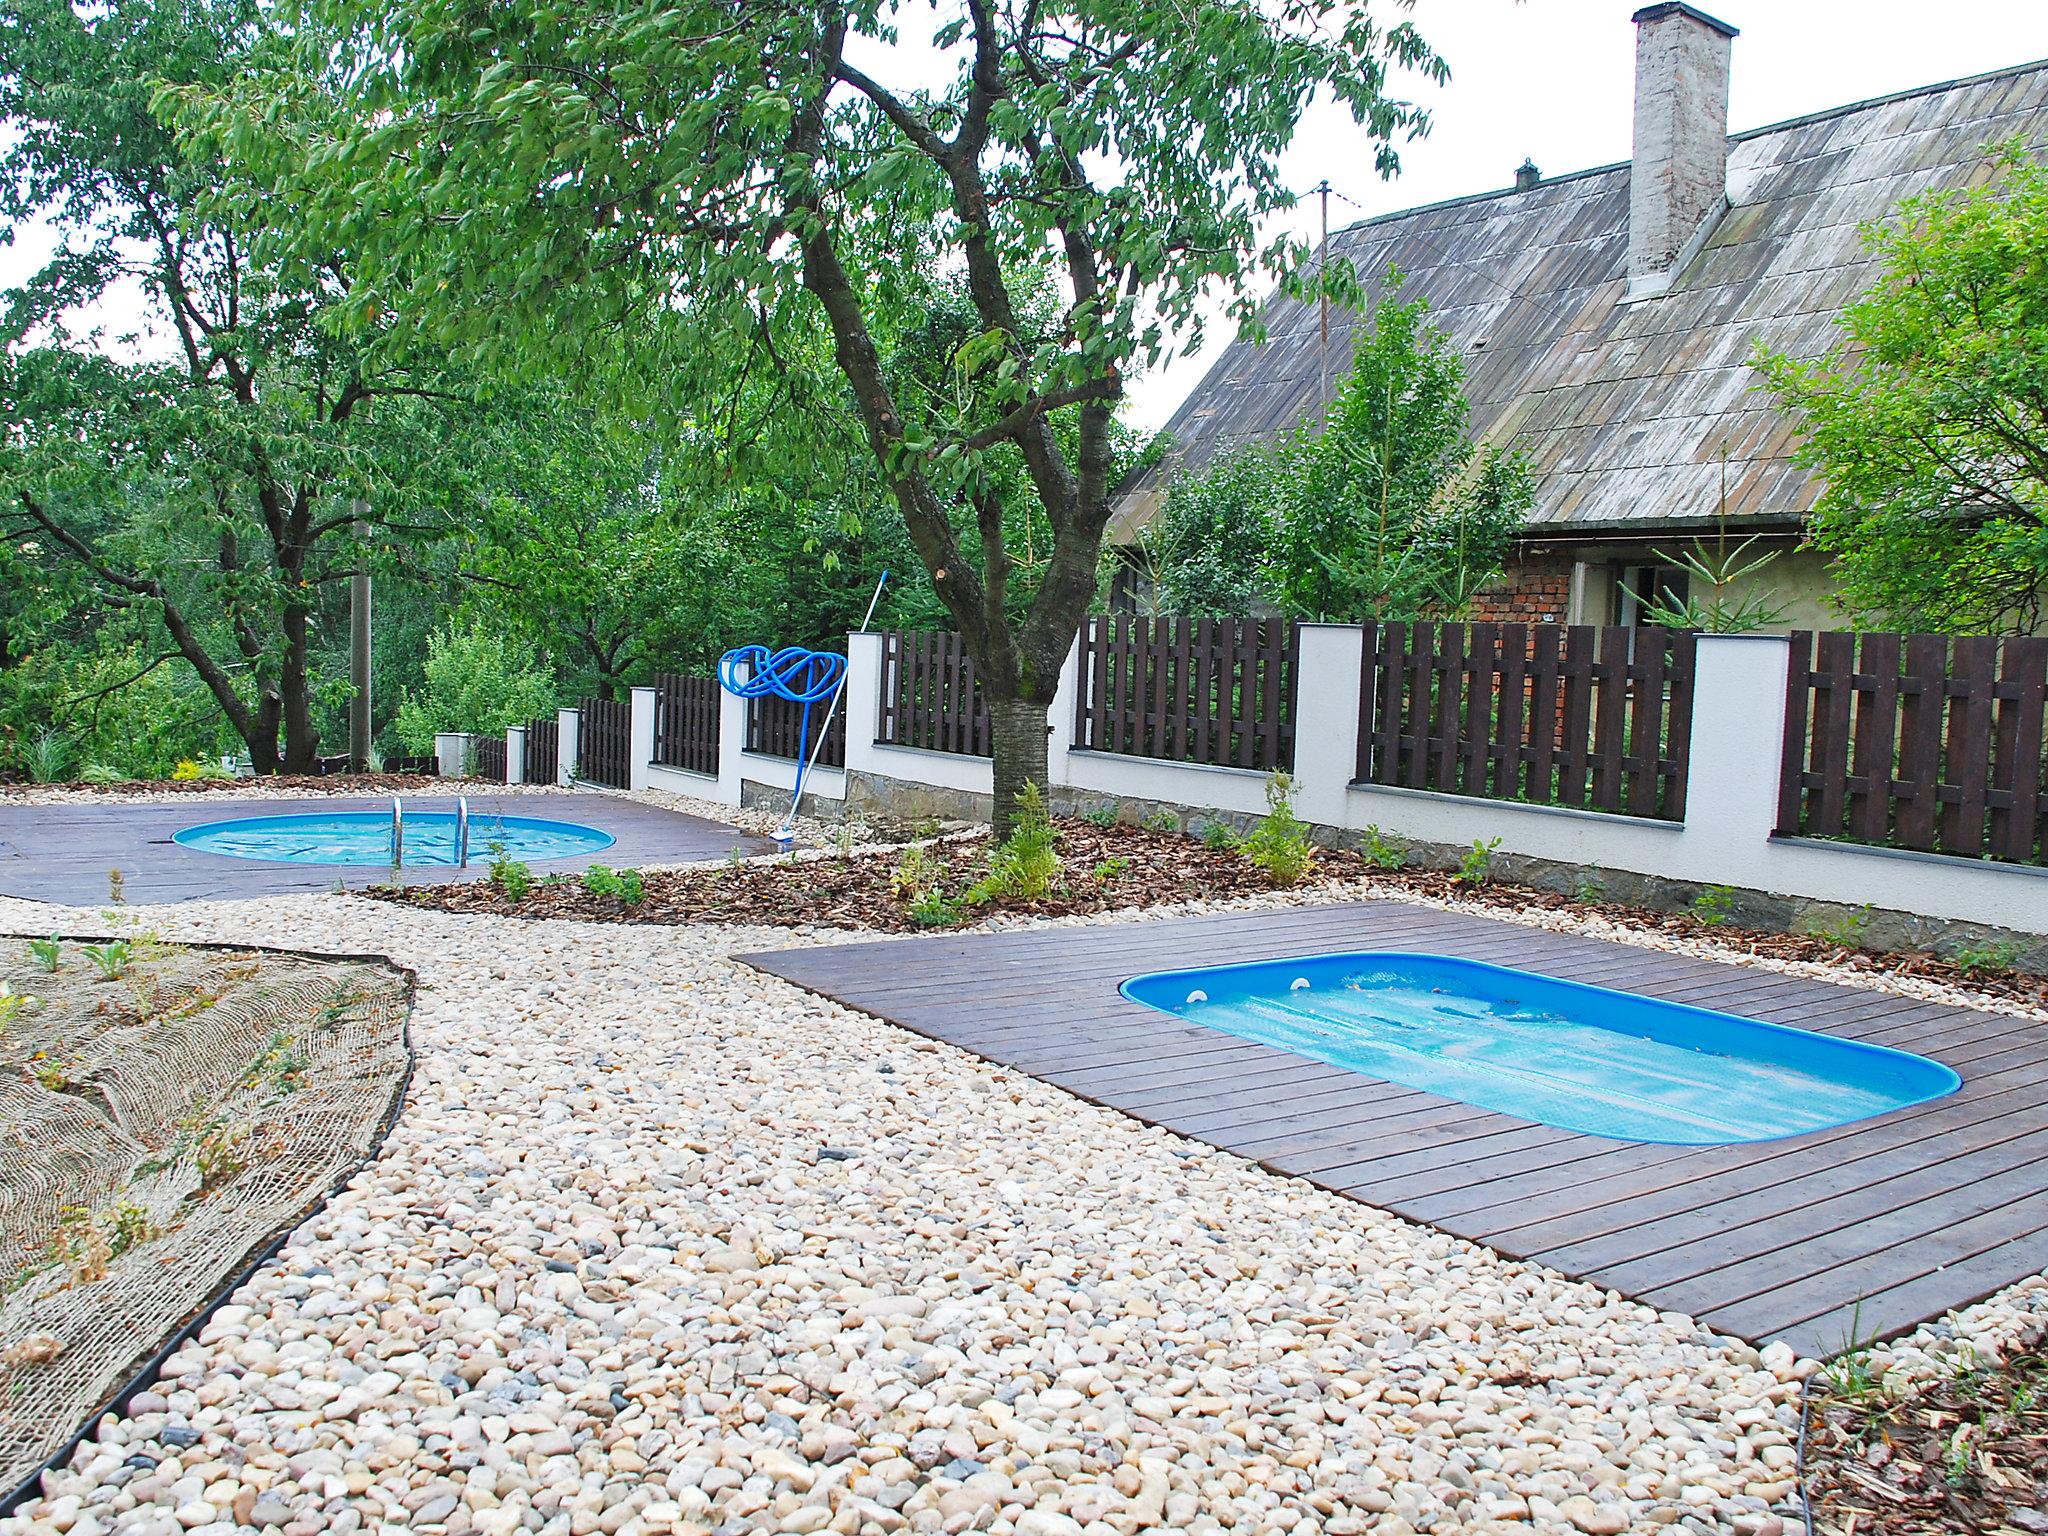 Foto 2 - Casa con 5 camere da letto a Holetín con piscina privata e giardino